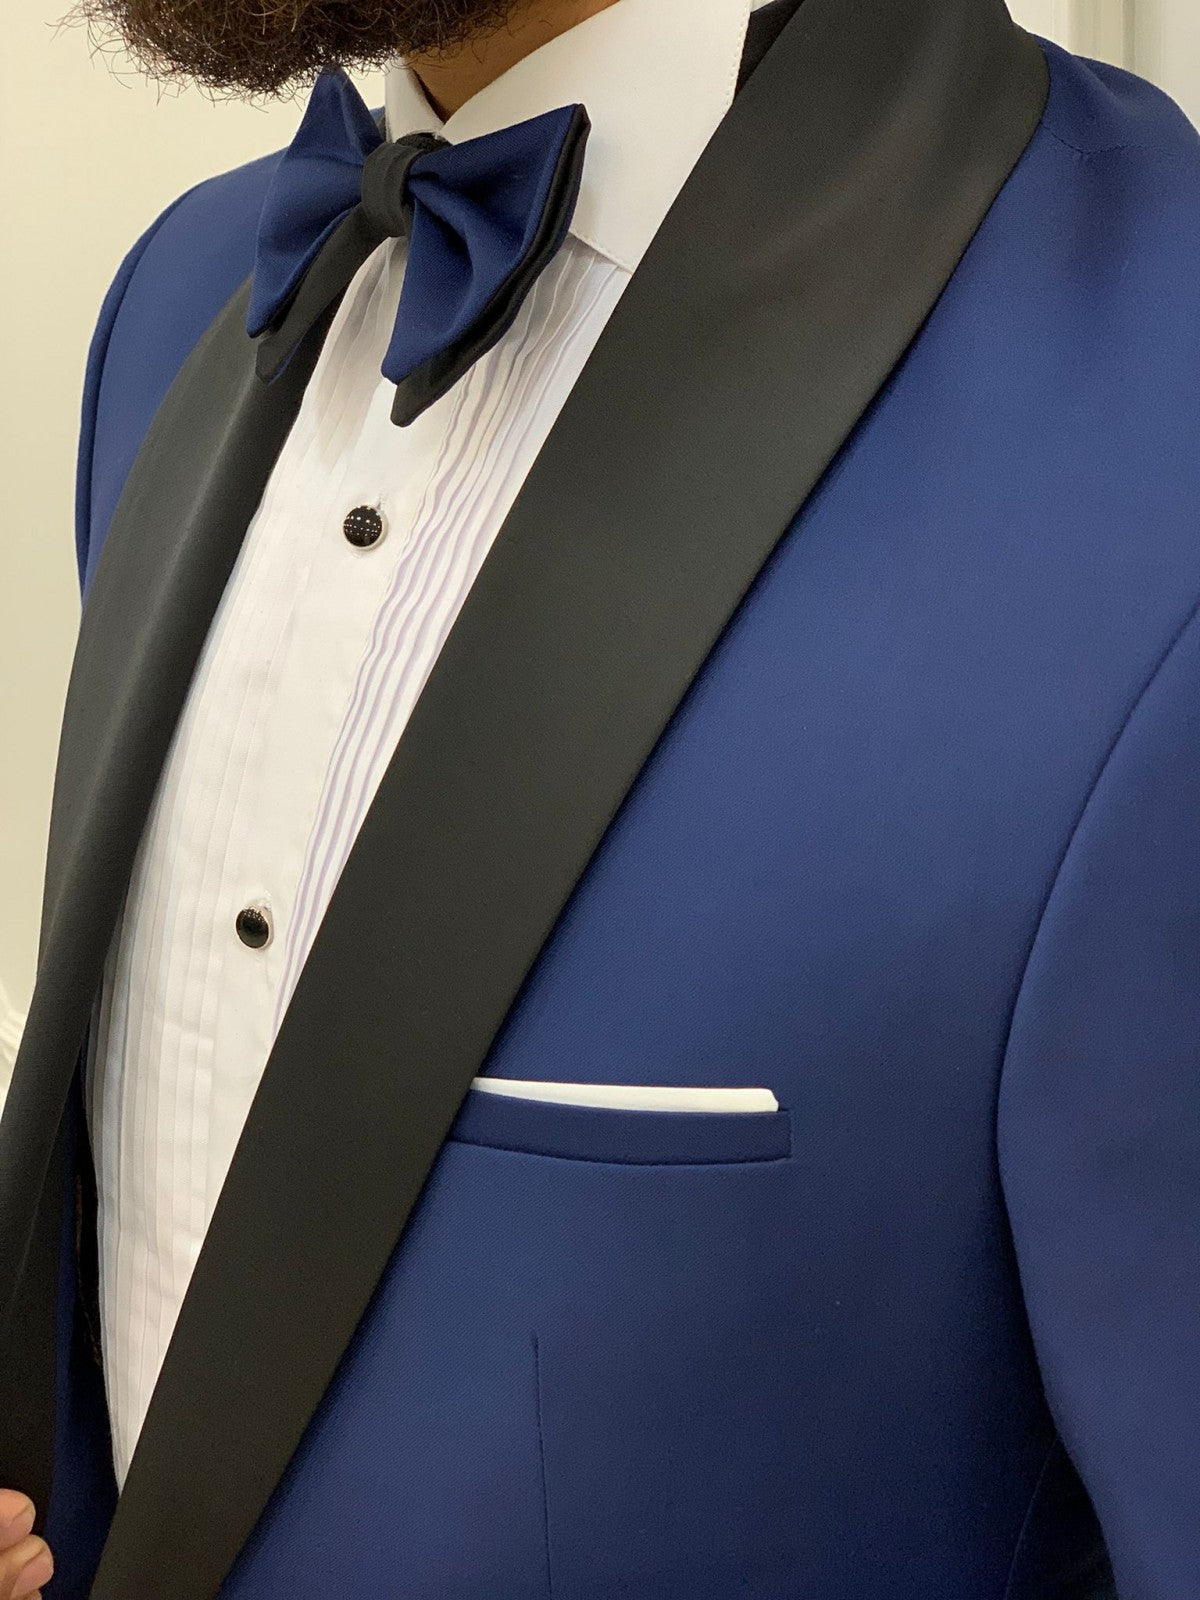 Shawl Collar Italian Cut Men's Groom Suit